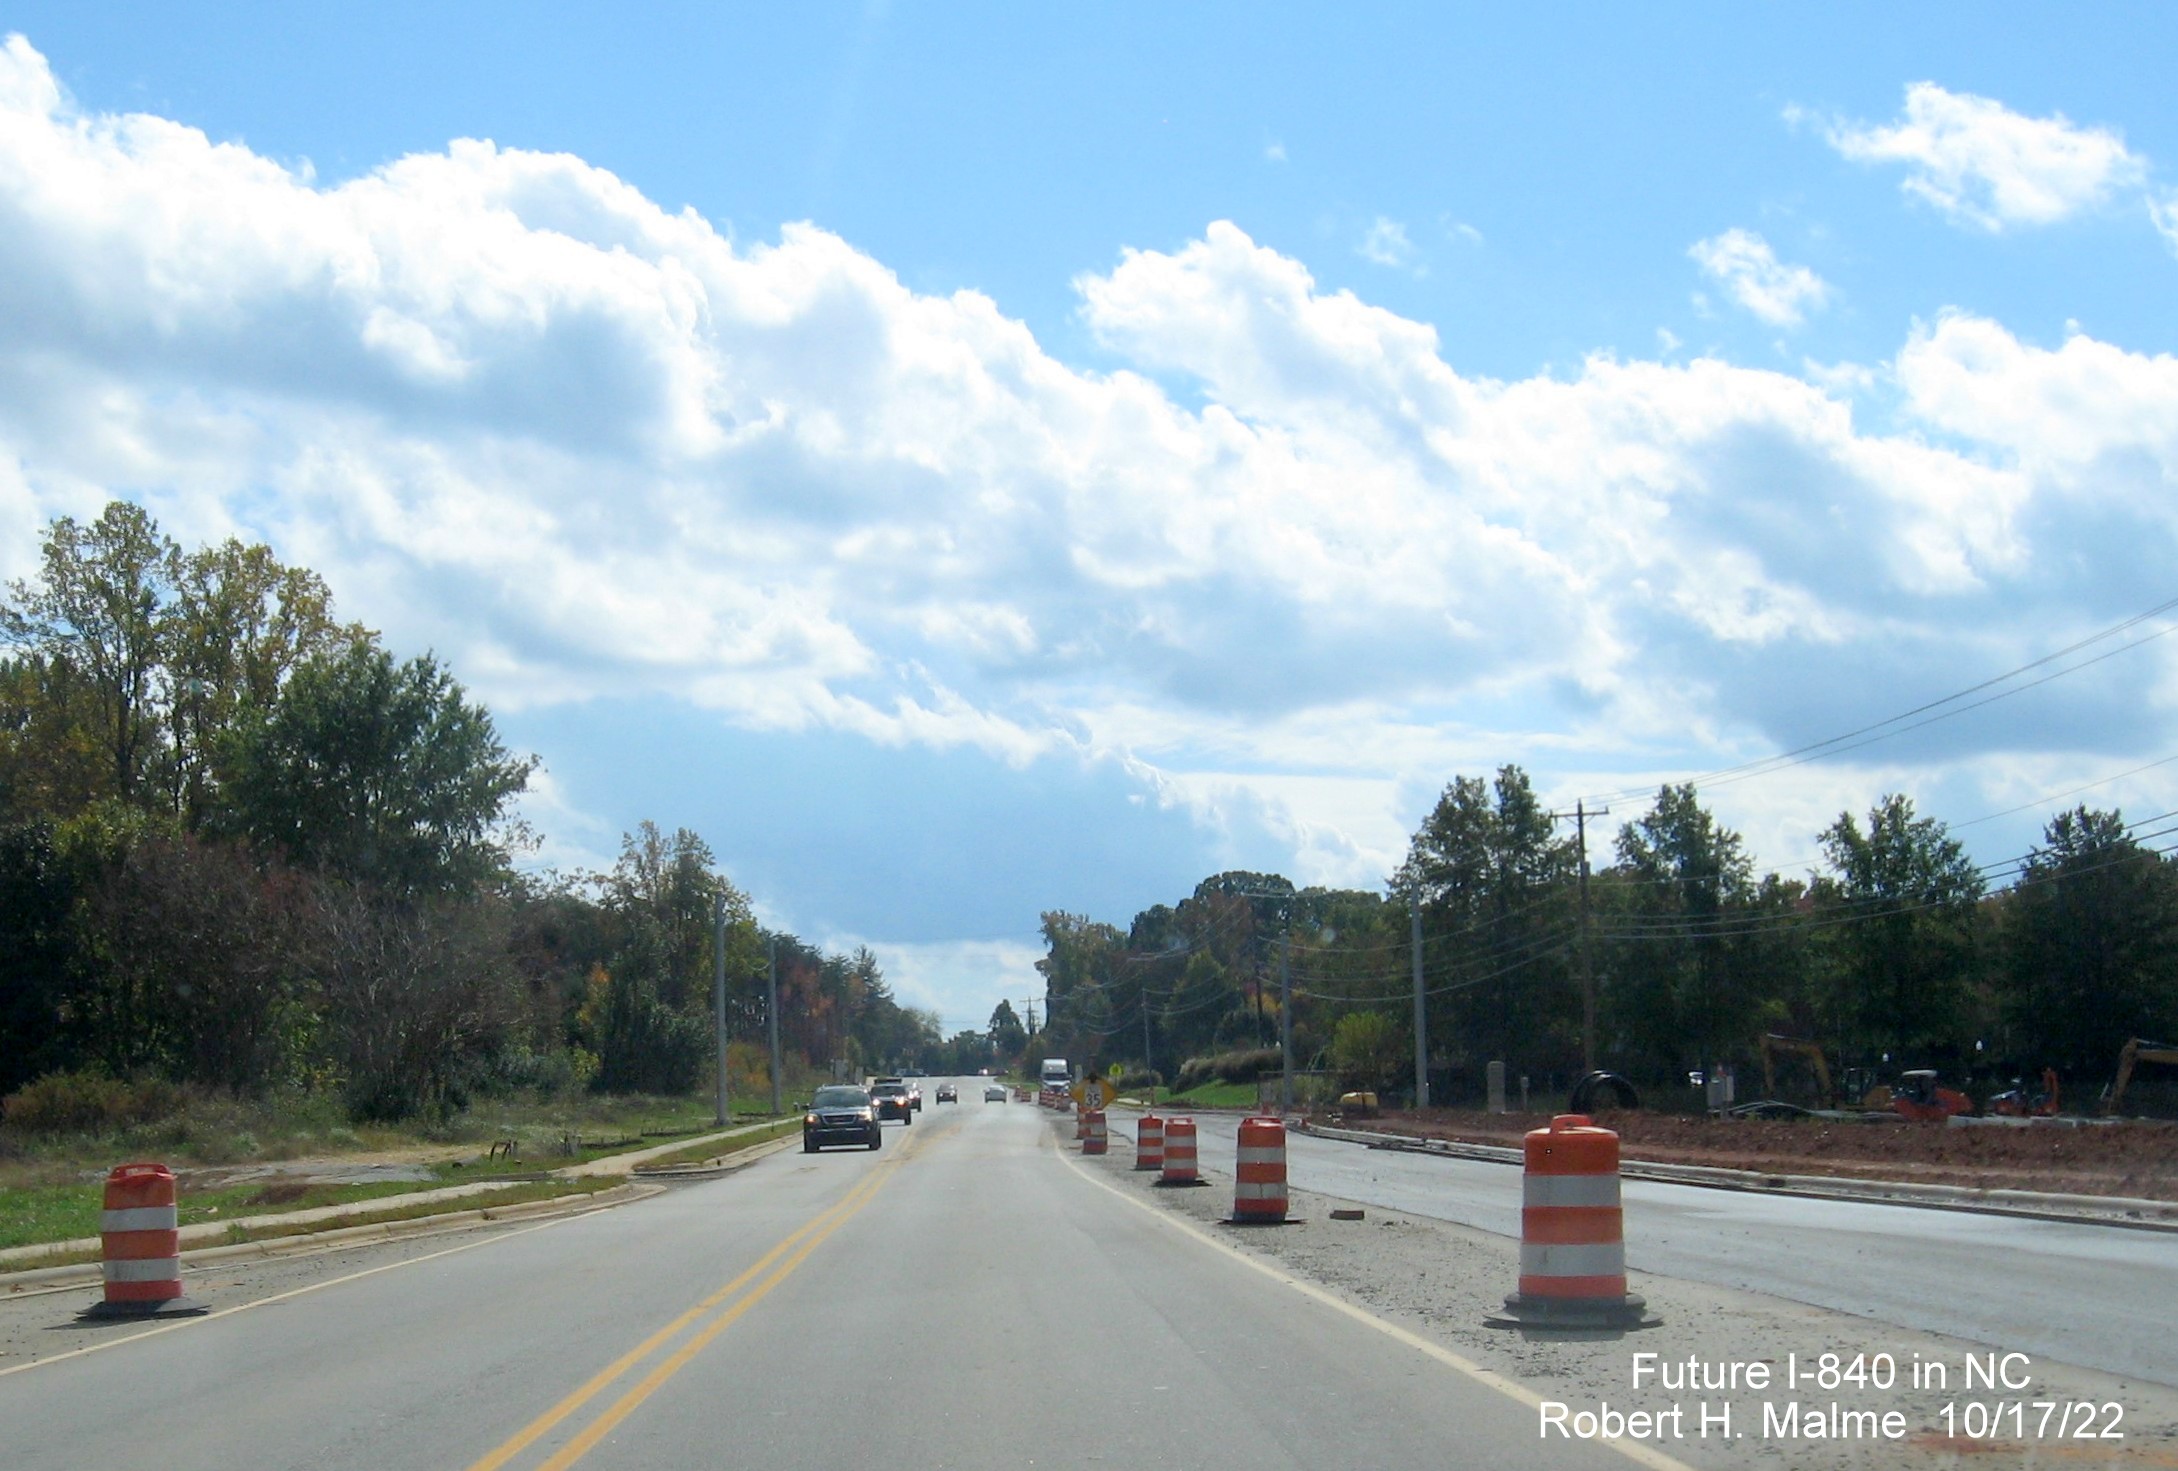 Image of Yanceyville Street south of new bridge over Greensboro Urban Loop (Future I-840), October 2022